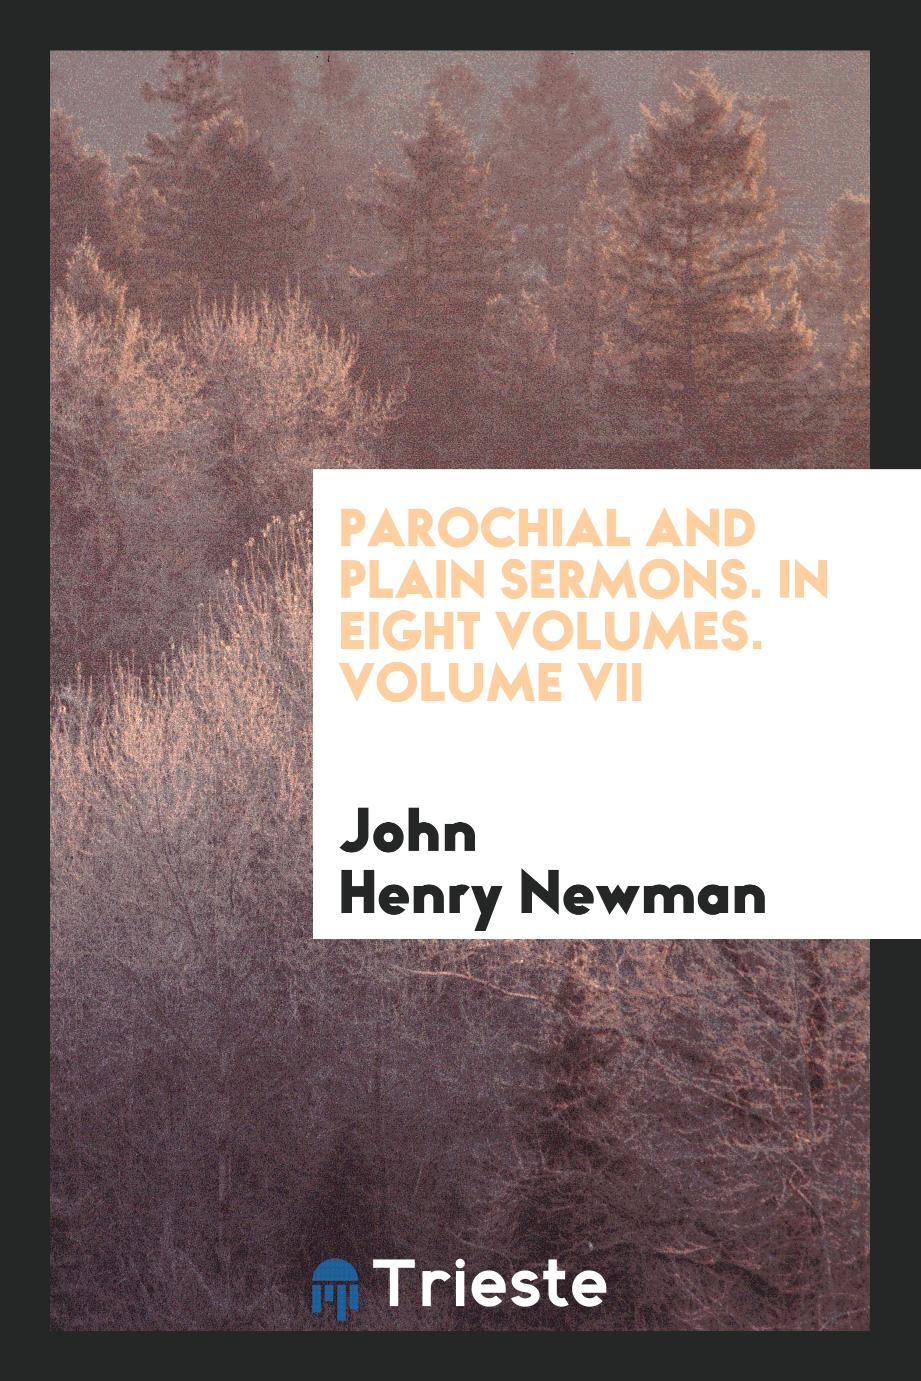 Parochial and plain sermons. In eight volumes. Volume VII